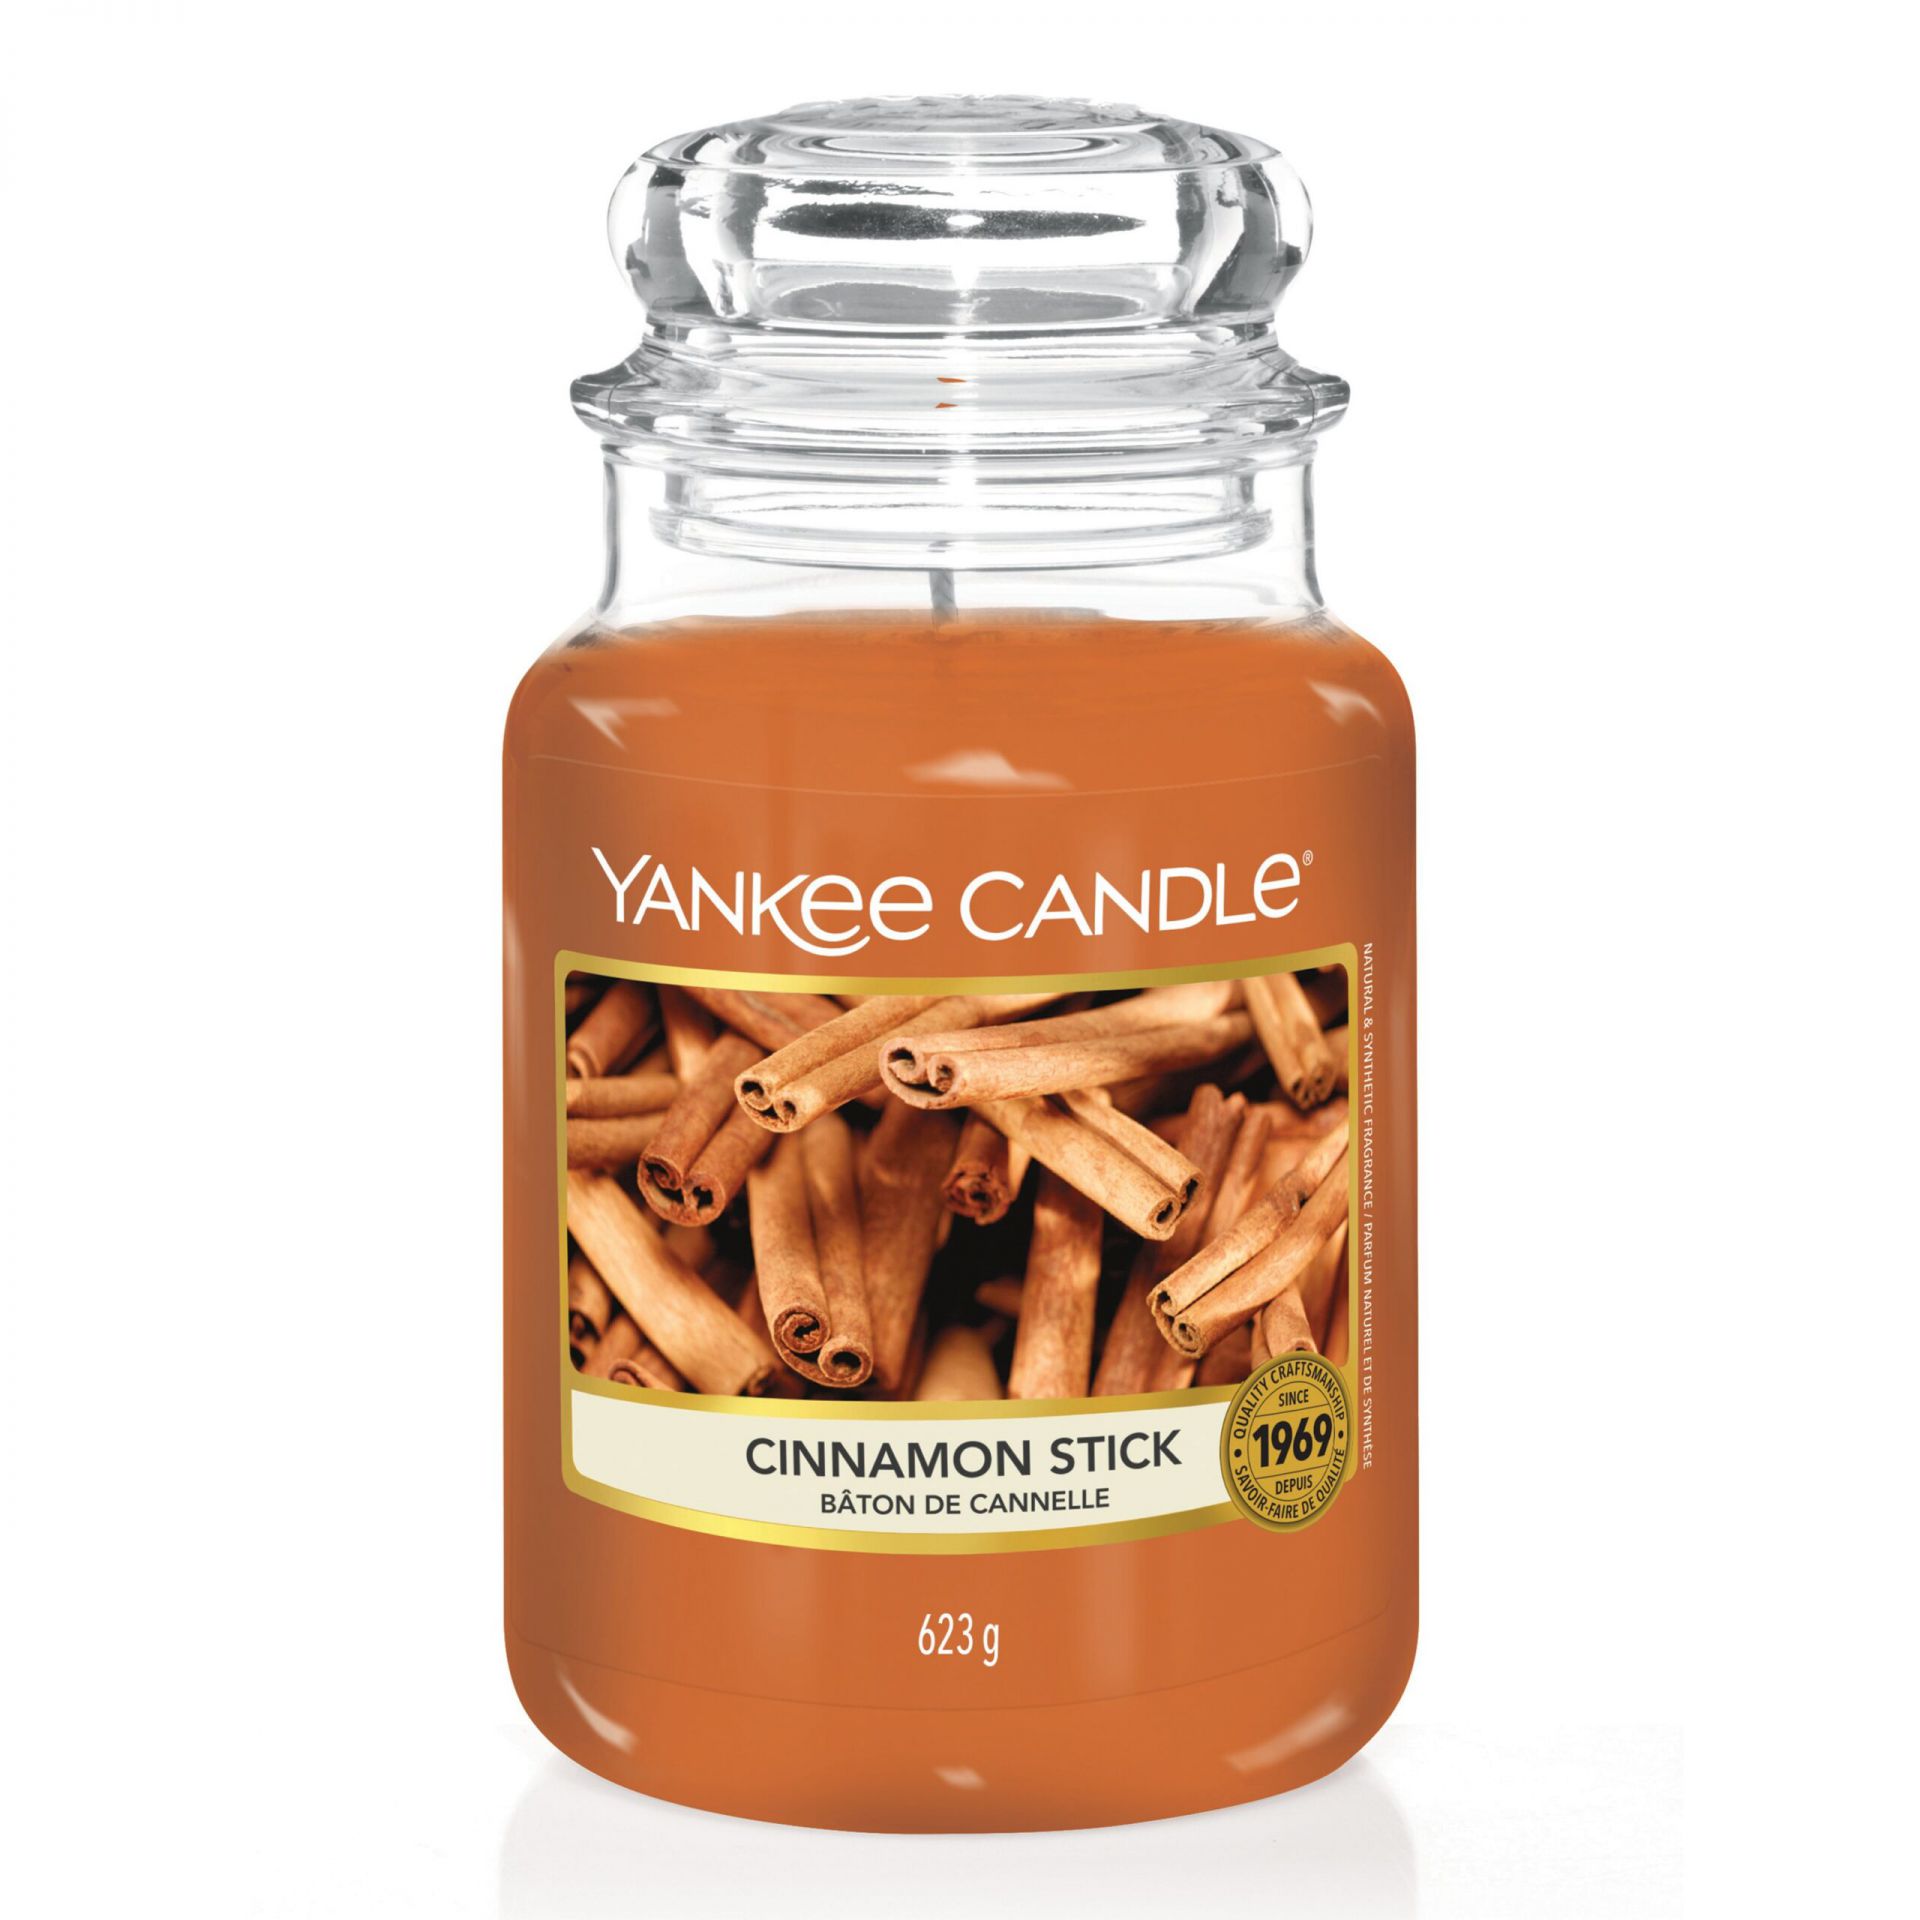 YANKEE CANDLE CINNAMON STICK 623G